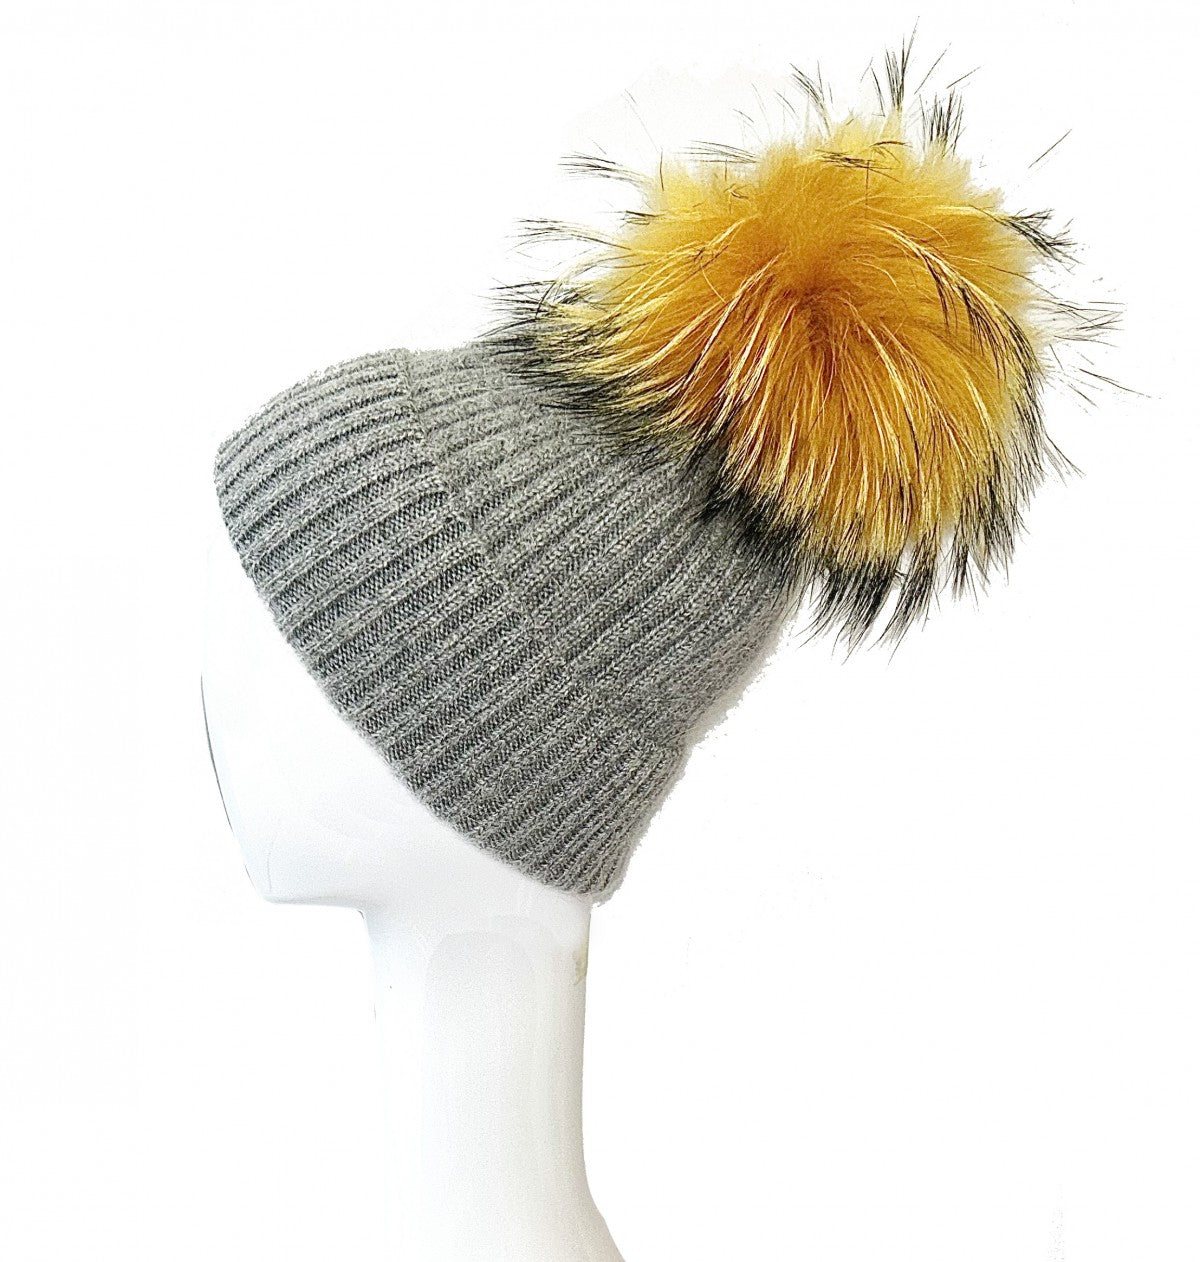 Angora/Wool Blend Hat in Golden